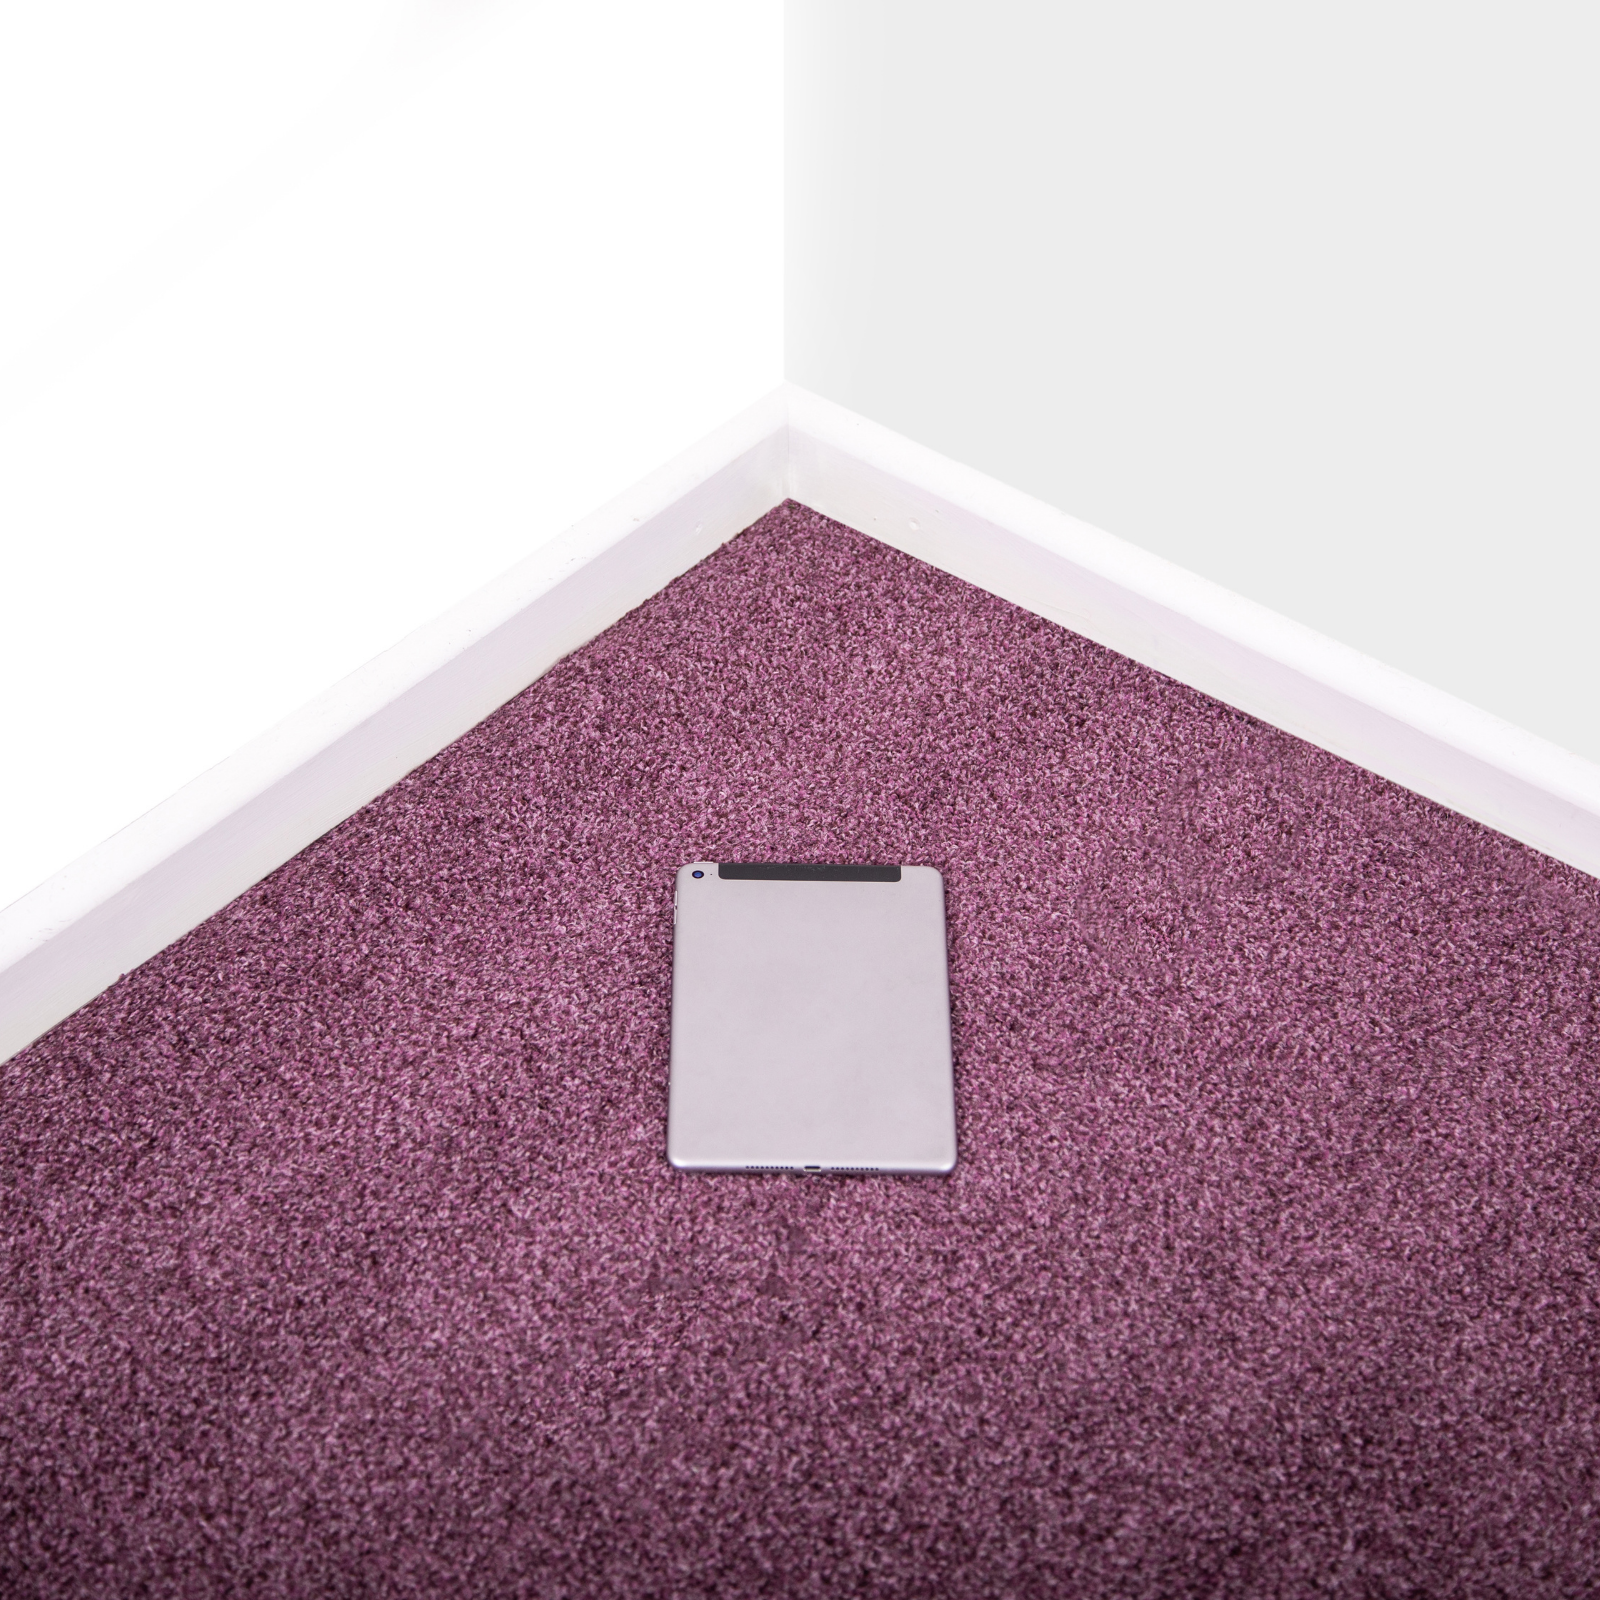 Purple Blackberry Twist Carpet